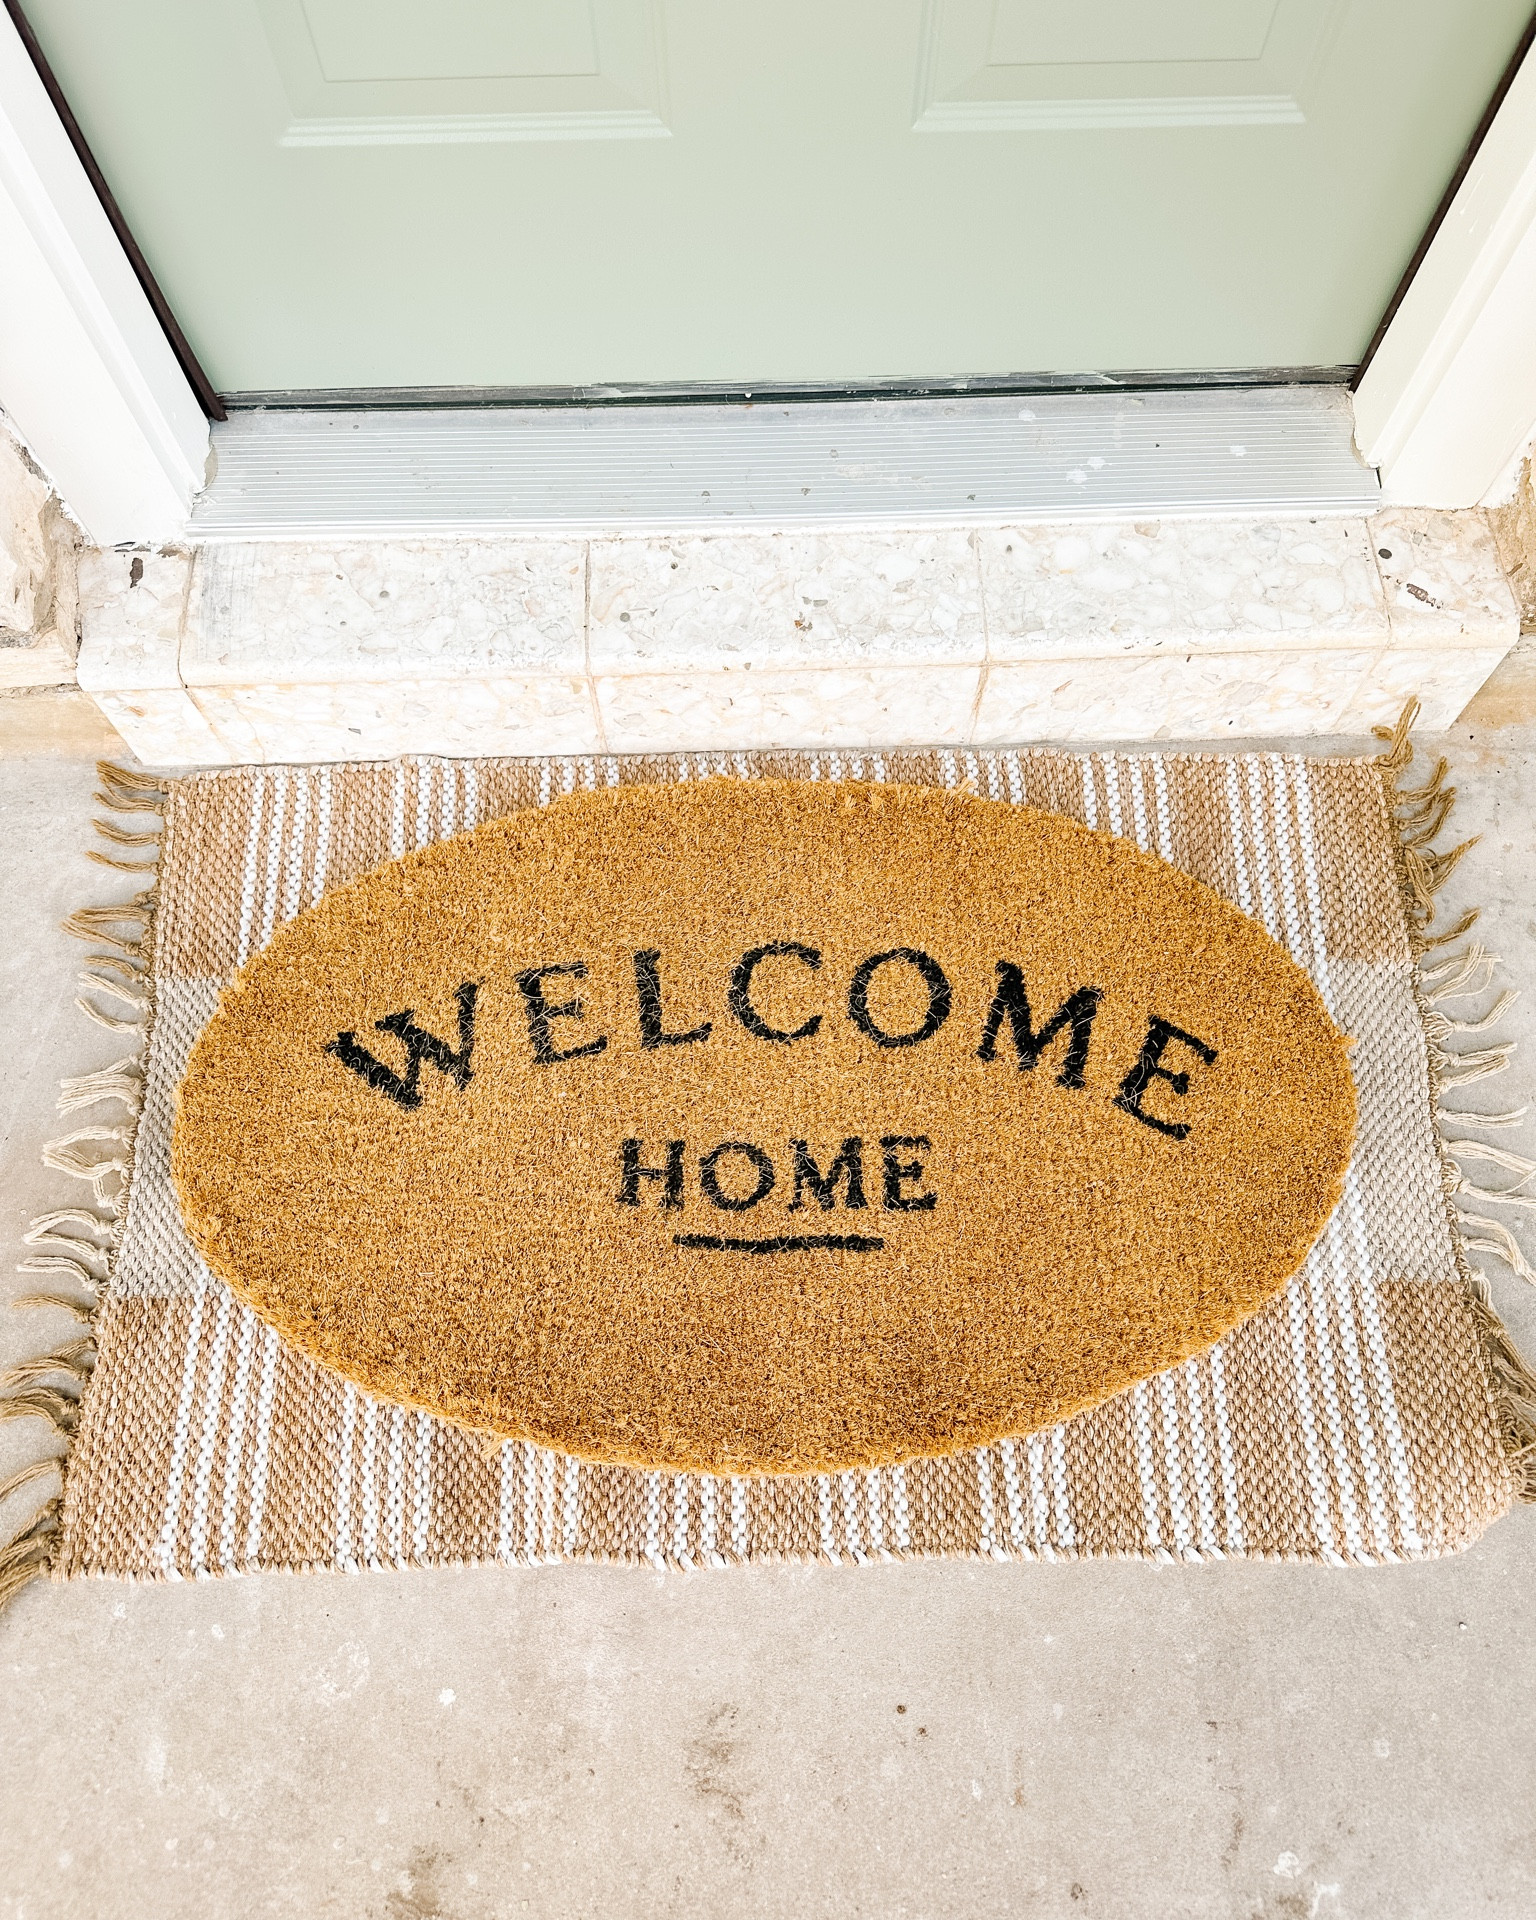 J & M Home Fashions Circles Doormat